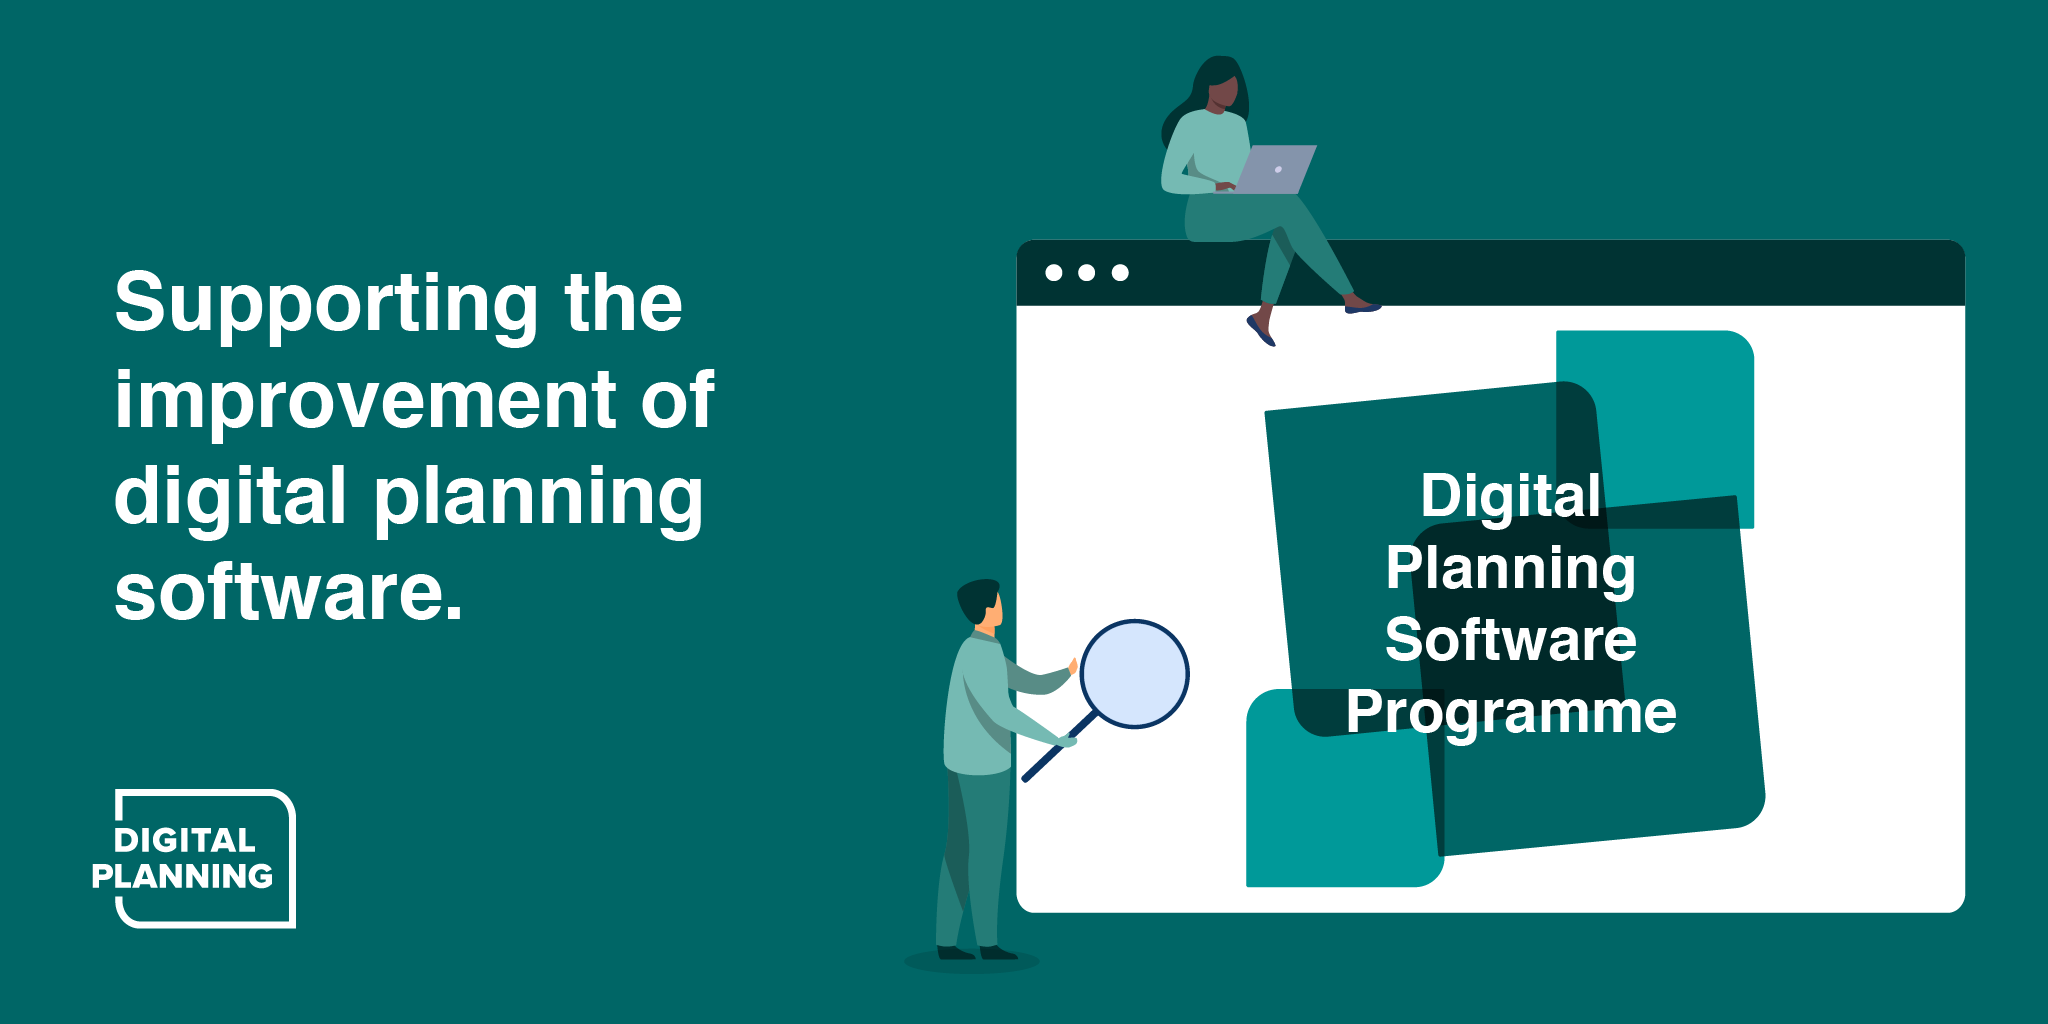 The Digital Planning Software Programme: supporting the improvement of digital planning software